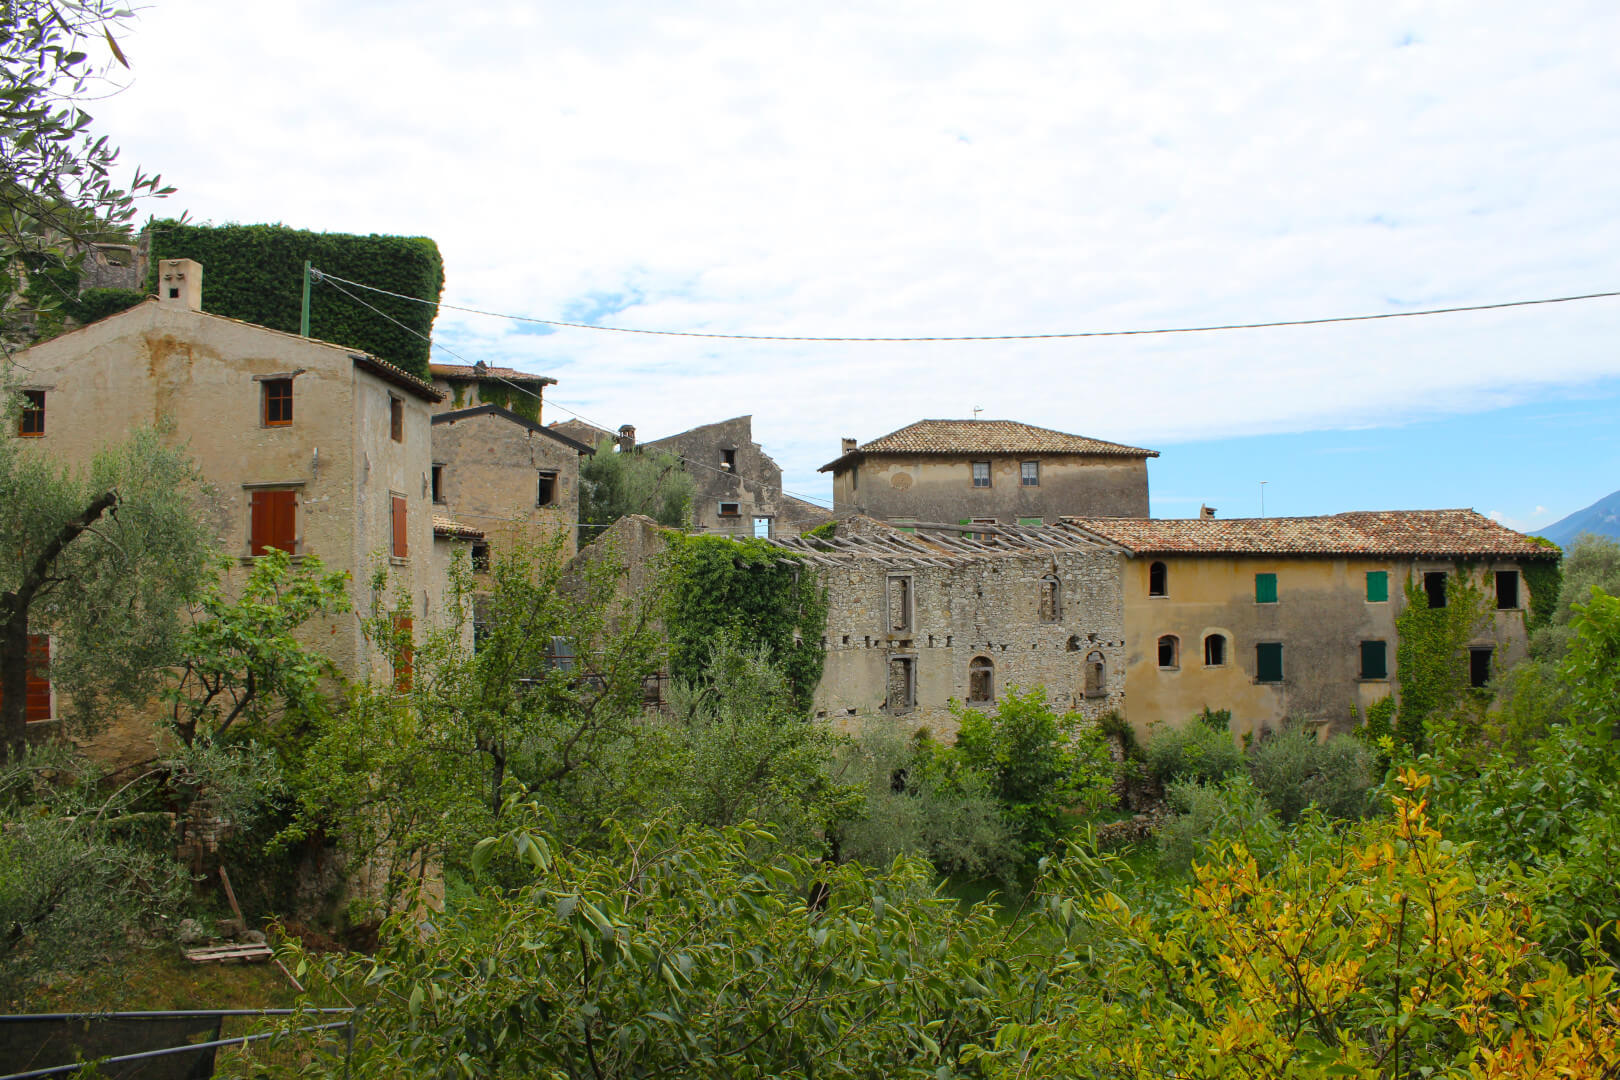 Five most breathtaking viewpoints around Lake Garda